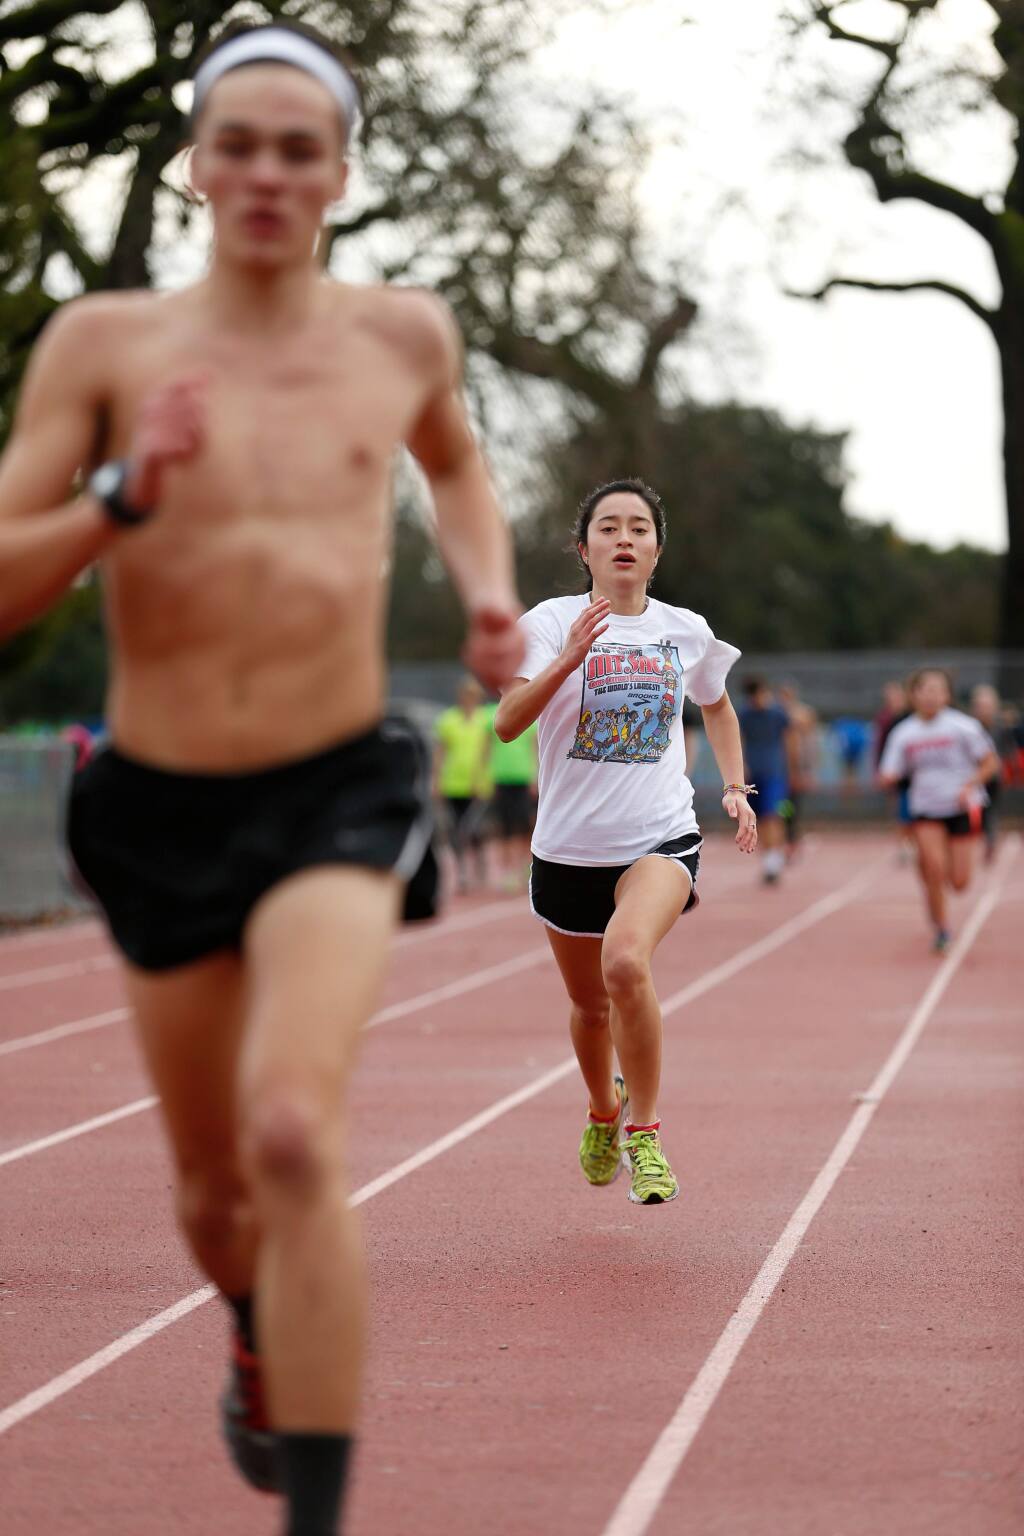 Santa Rosa High School senior Aimee Holland on a 600-meter run during track practice, in Santa Rosa, California on Wednesday, January 6, 2016. (Alvin Jornada / The Press Democrat)